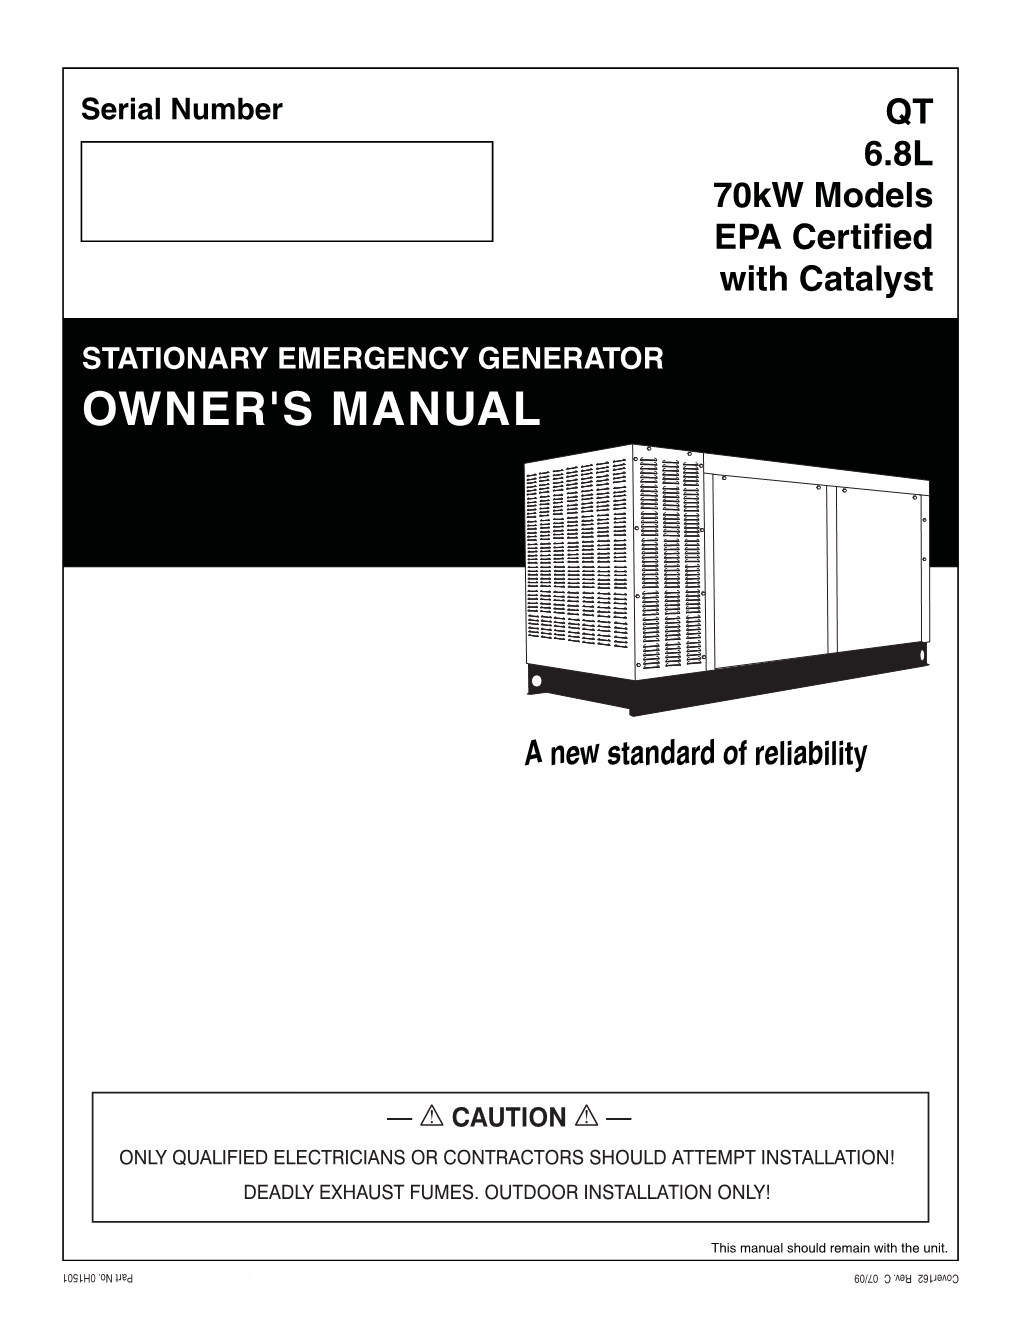 Stationary Emergency Generator Owner's Manual